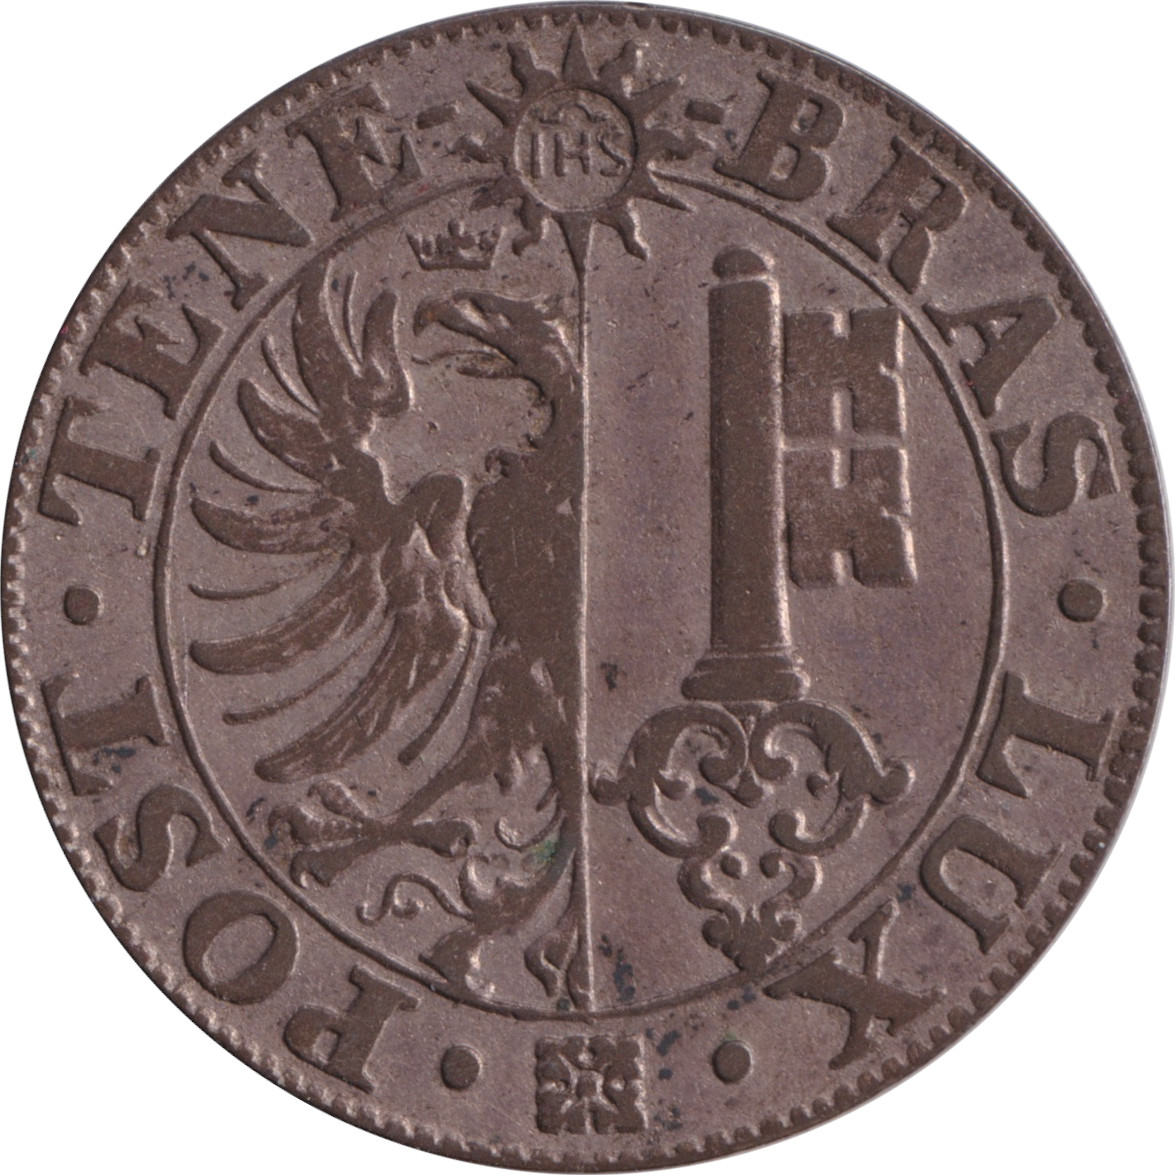 25 centimes - Armoiries